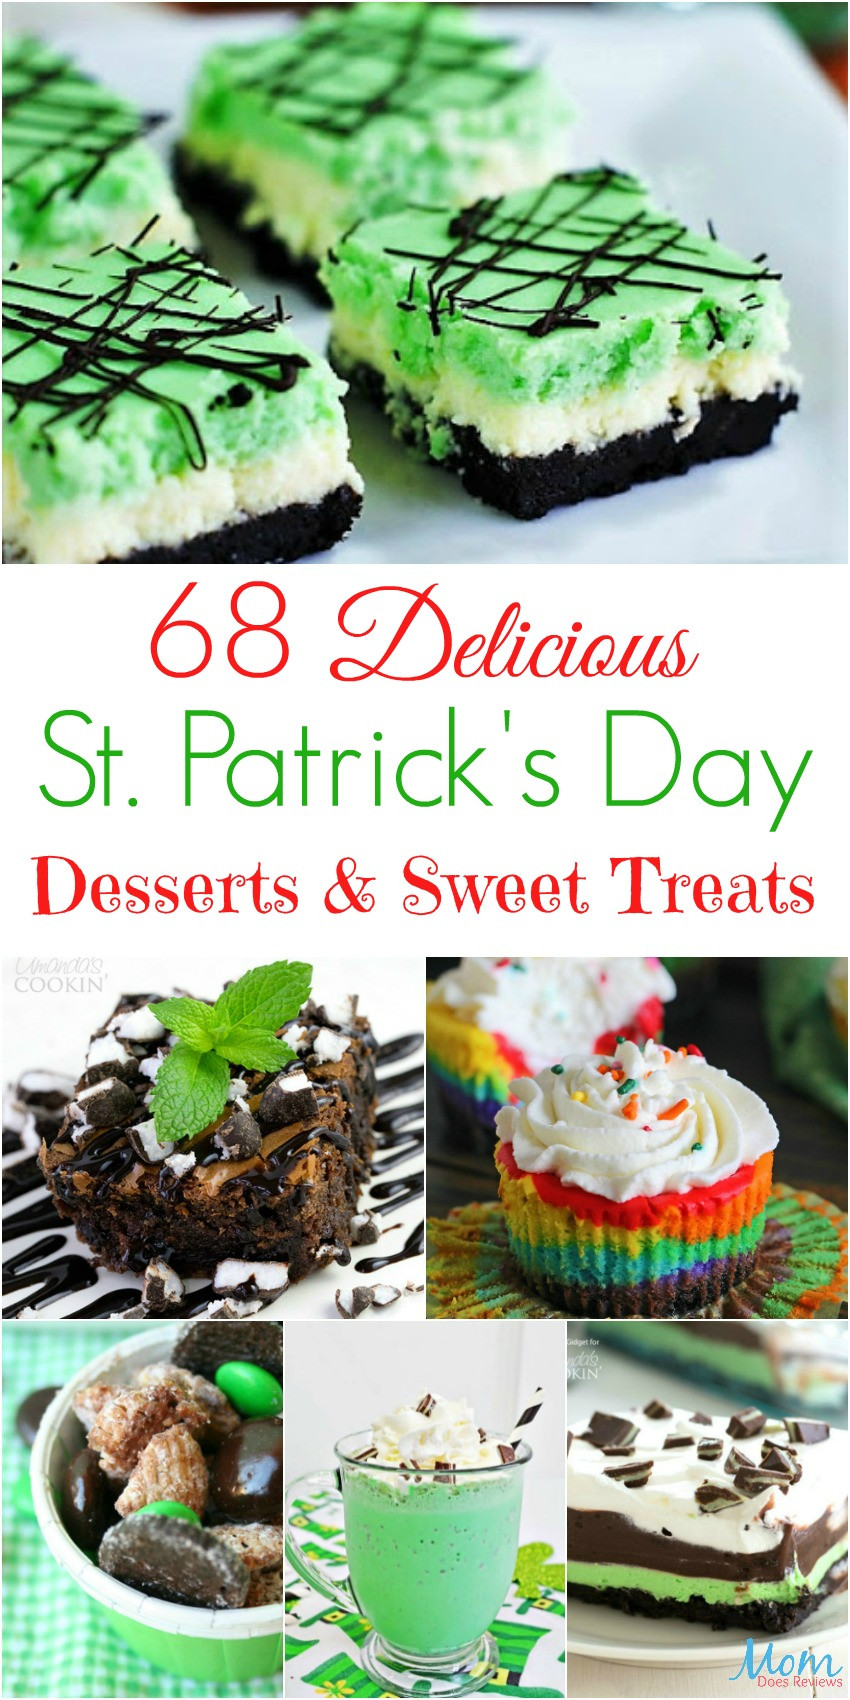 St. Patricks Day Desserts
 68 Delicious St Patrick s Day Desserts & Sweet Treats